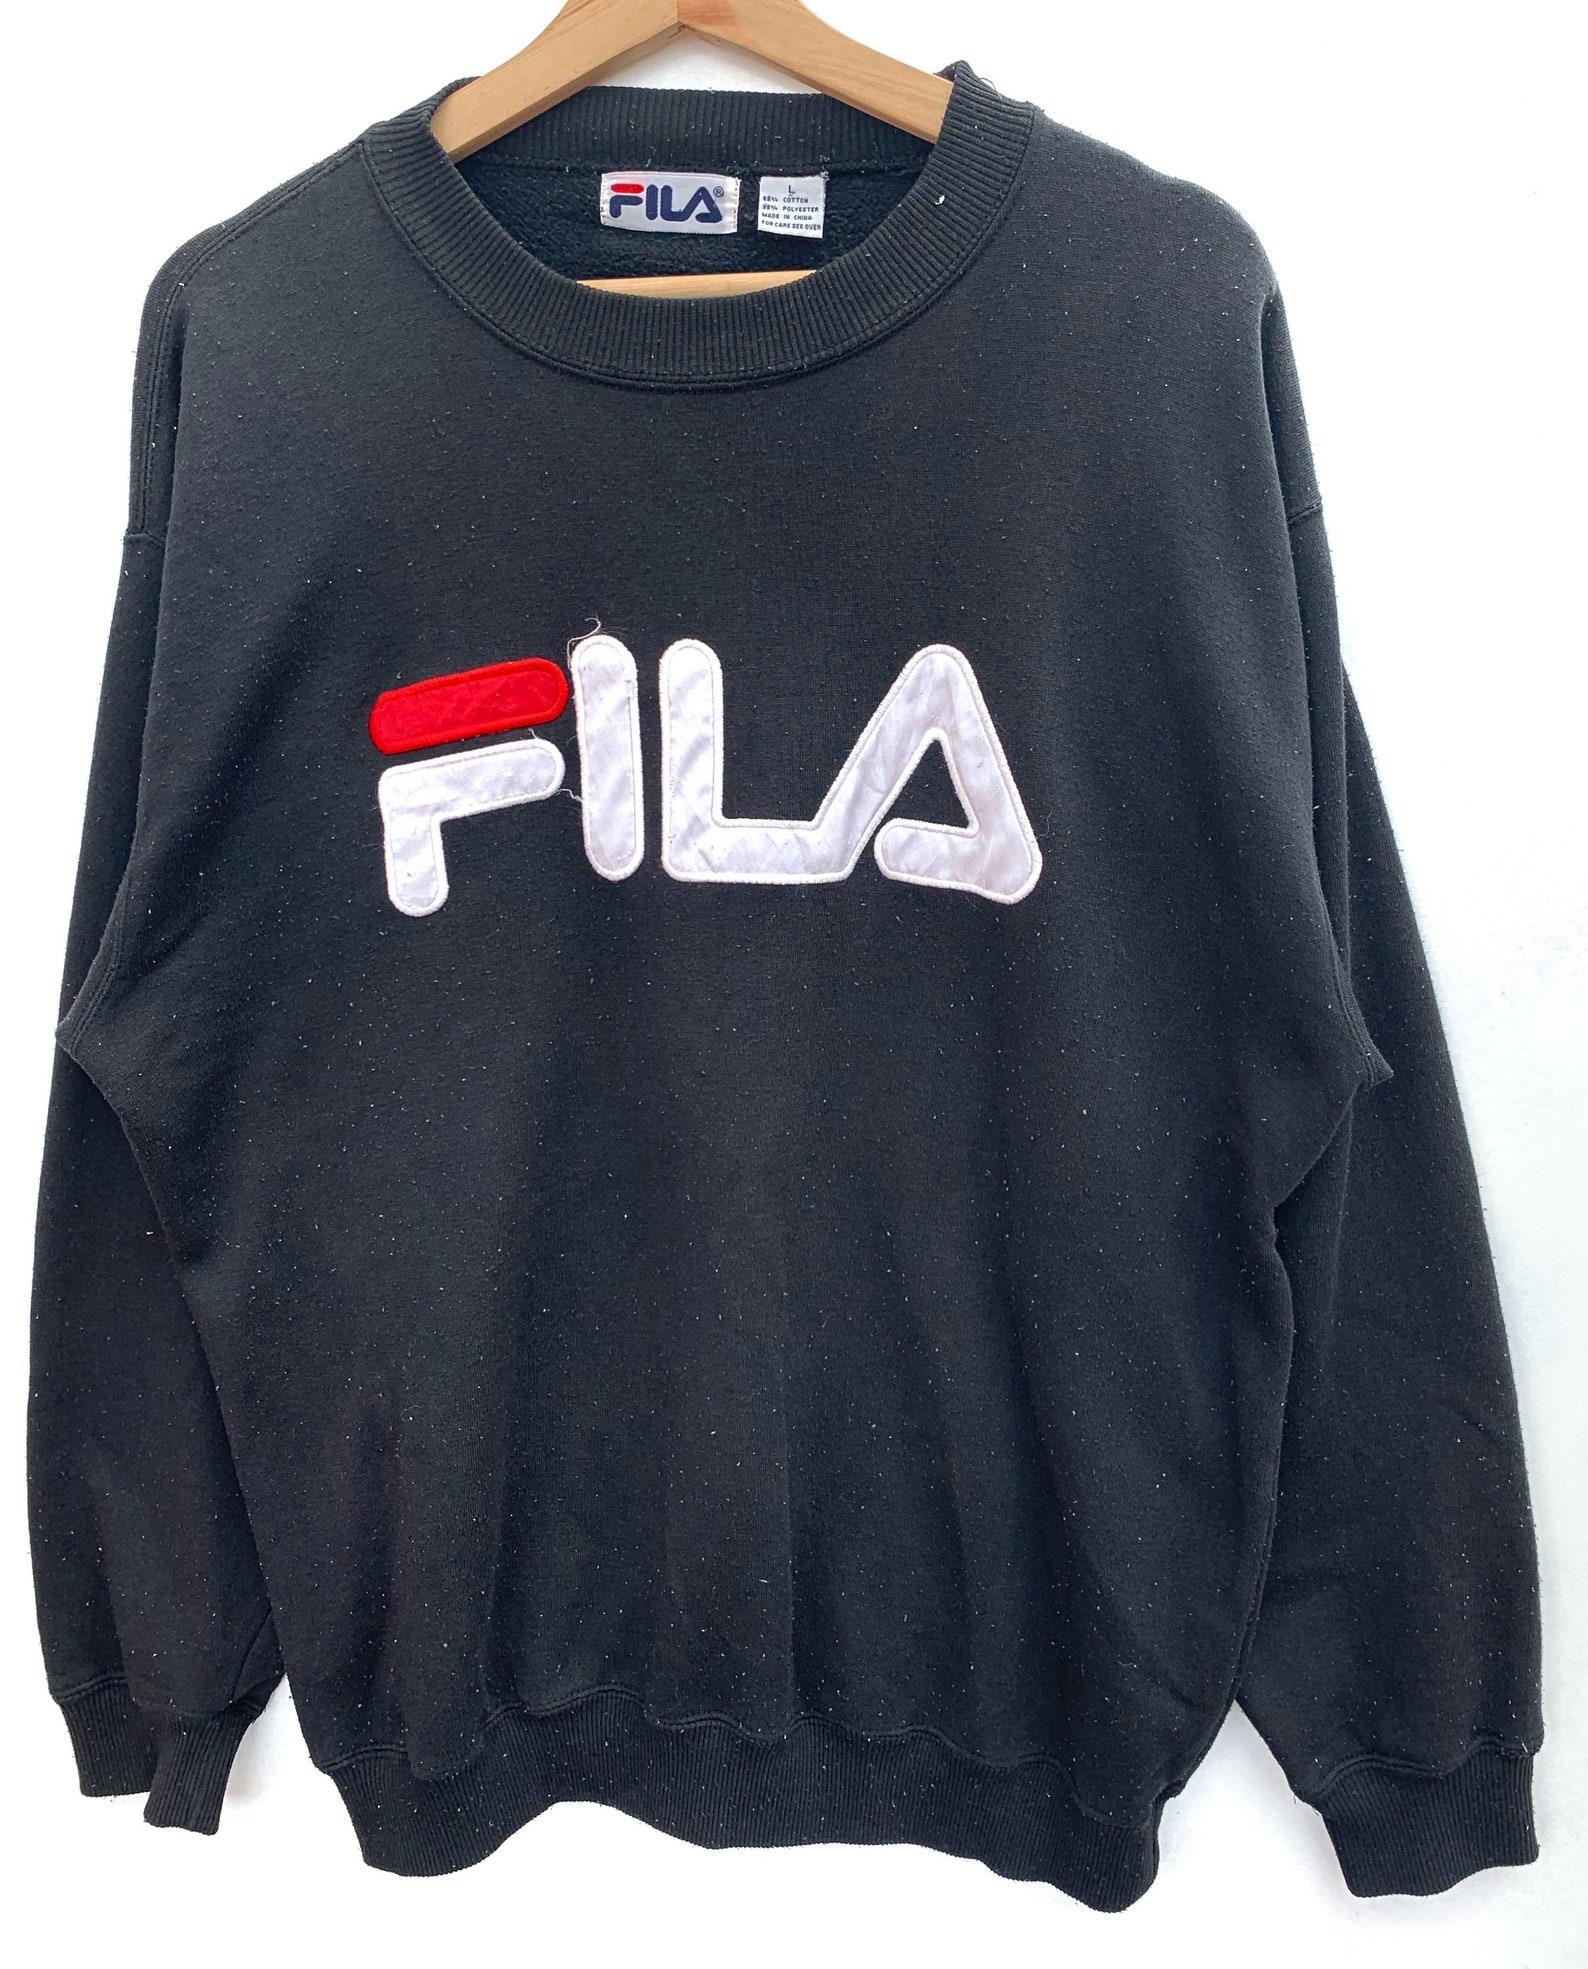 PICK Vintage Fila Crewneck Sweater Fila Big Logo Embroided Fila ...